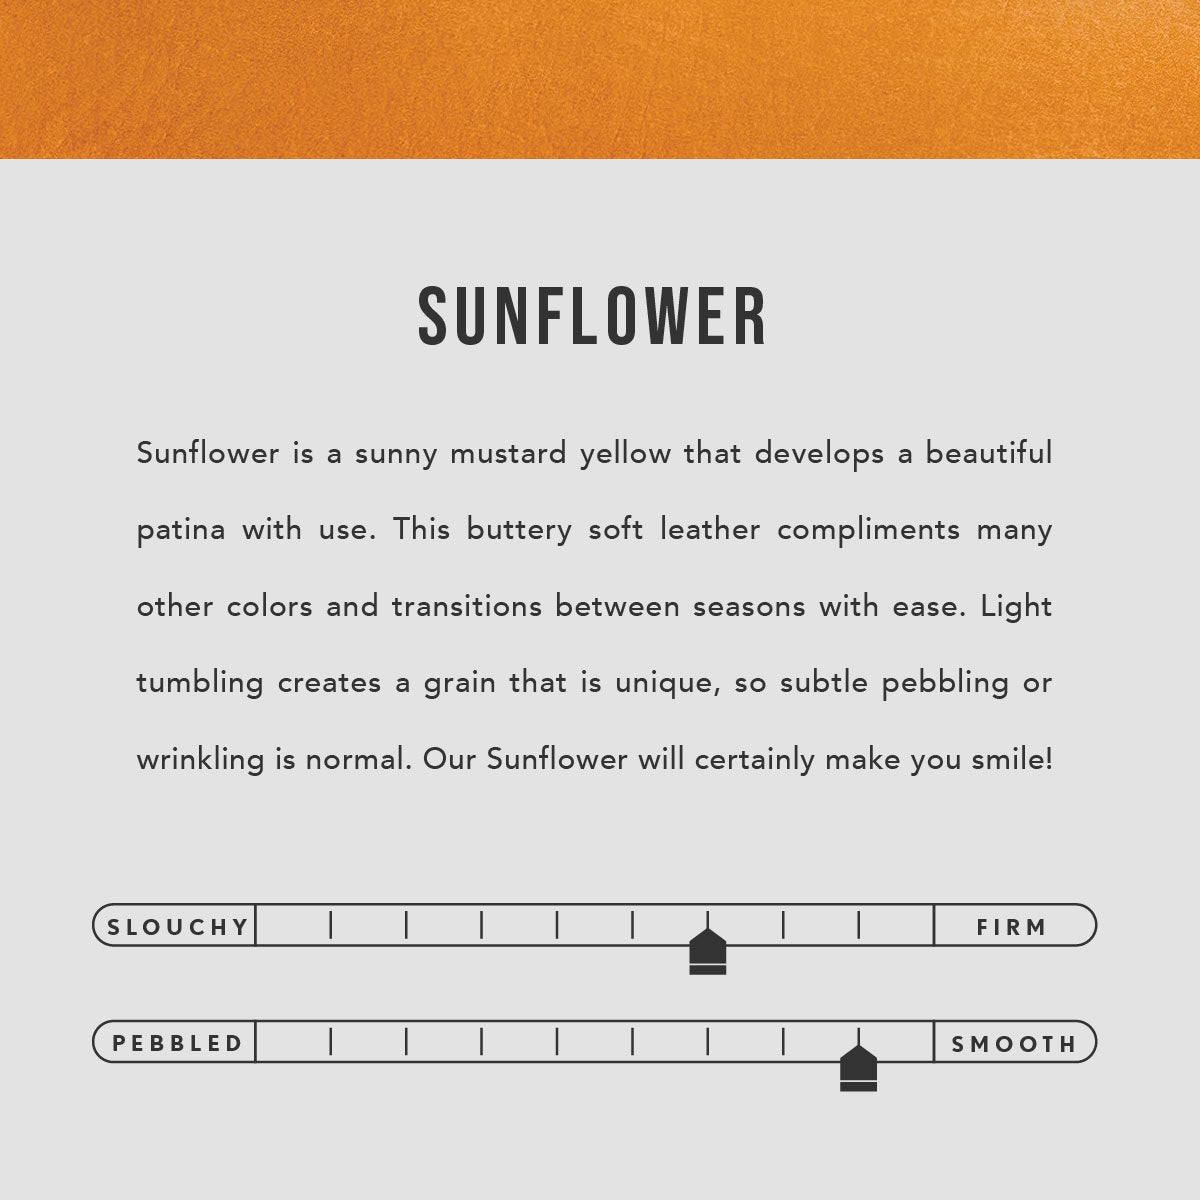 Sunflower | infographic